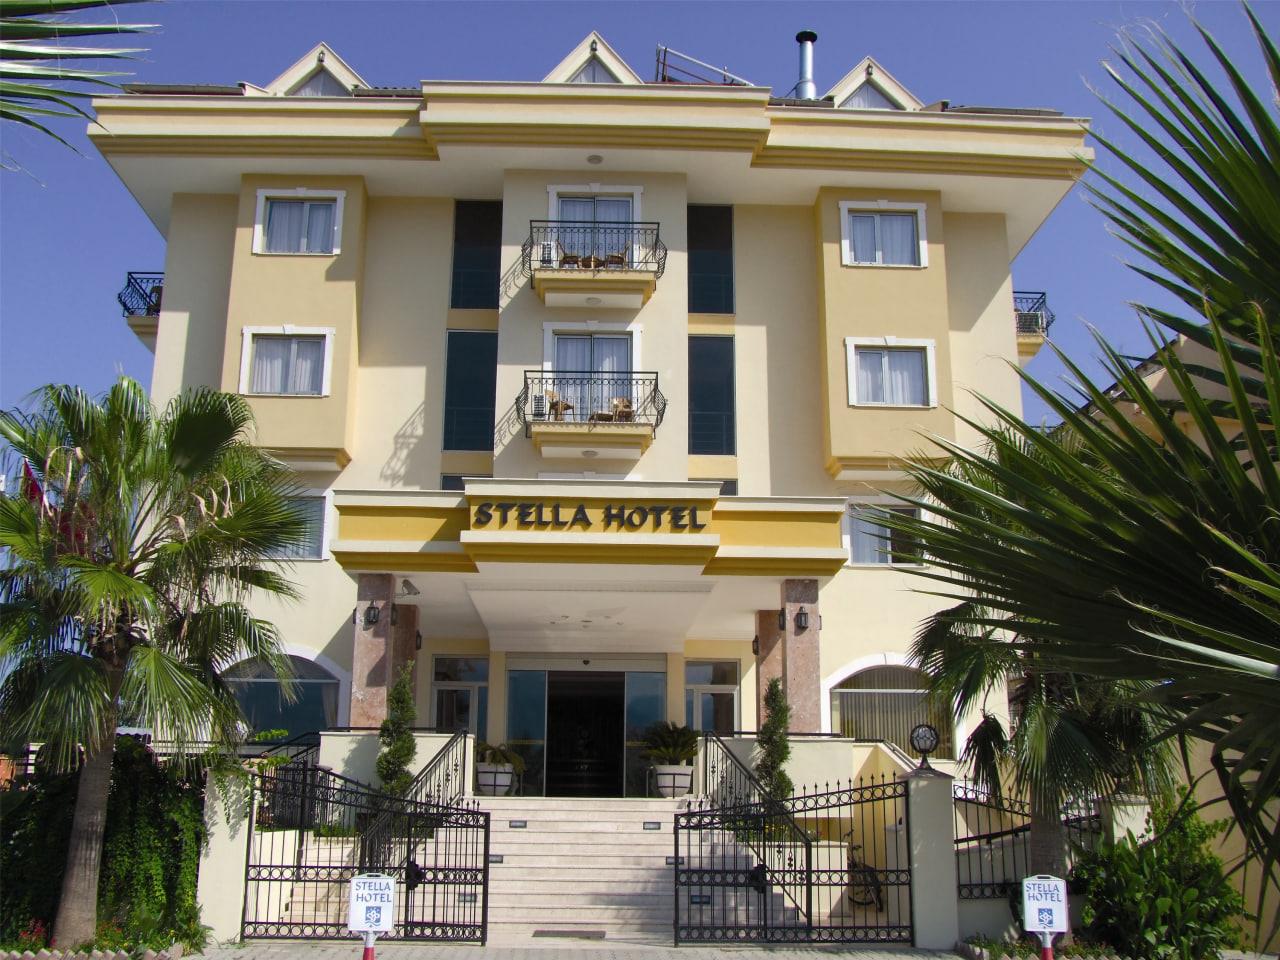 Stella Hotel 4*